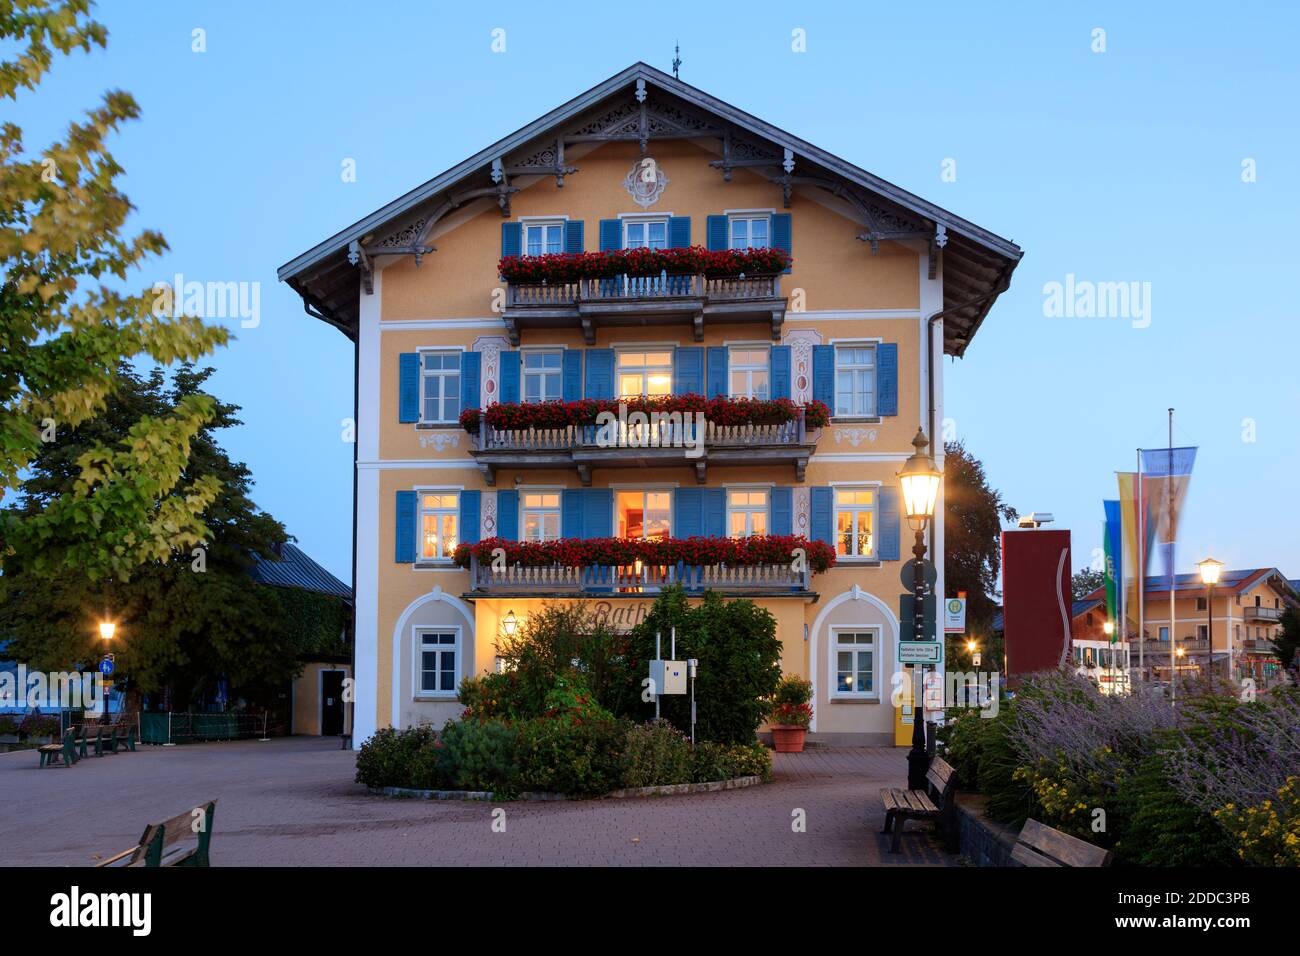 Germany, Bavaria, Tegernsee, Old town hall at springtime dusk Stock Photo